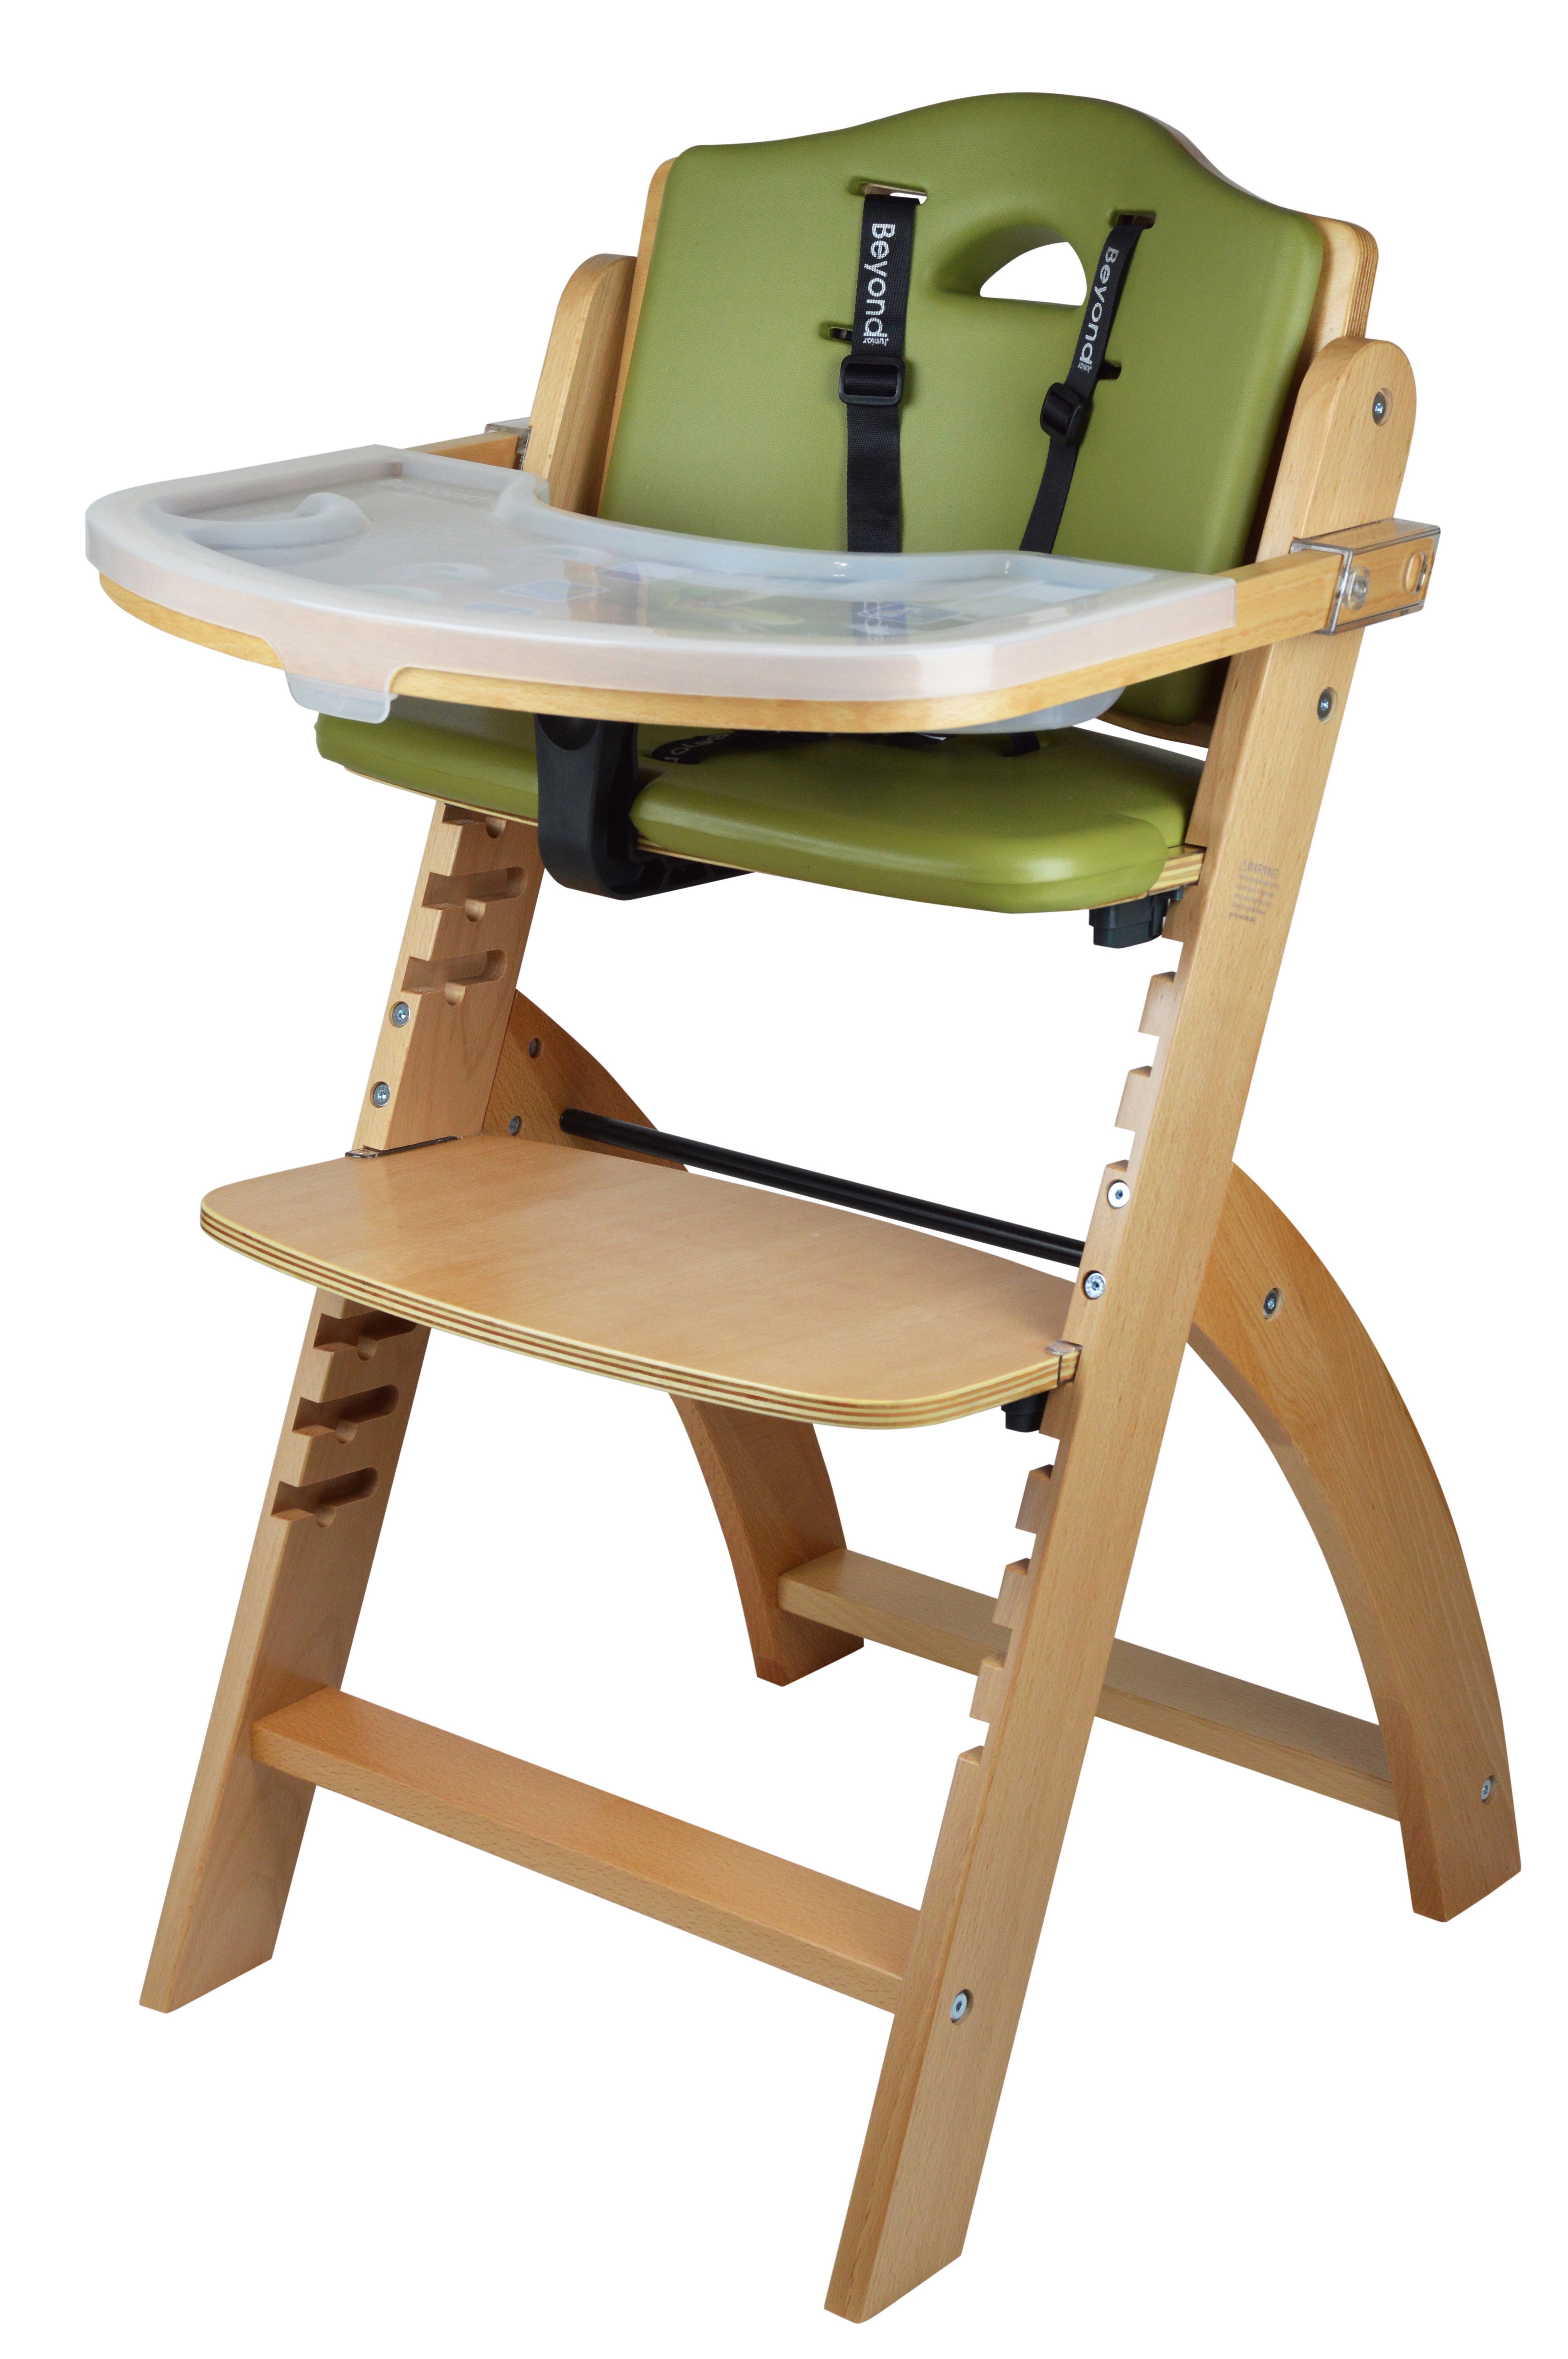 graco wooden high chair